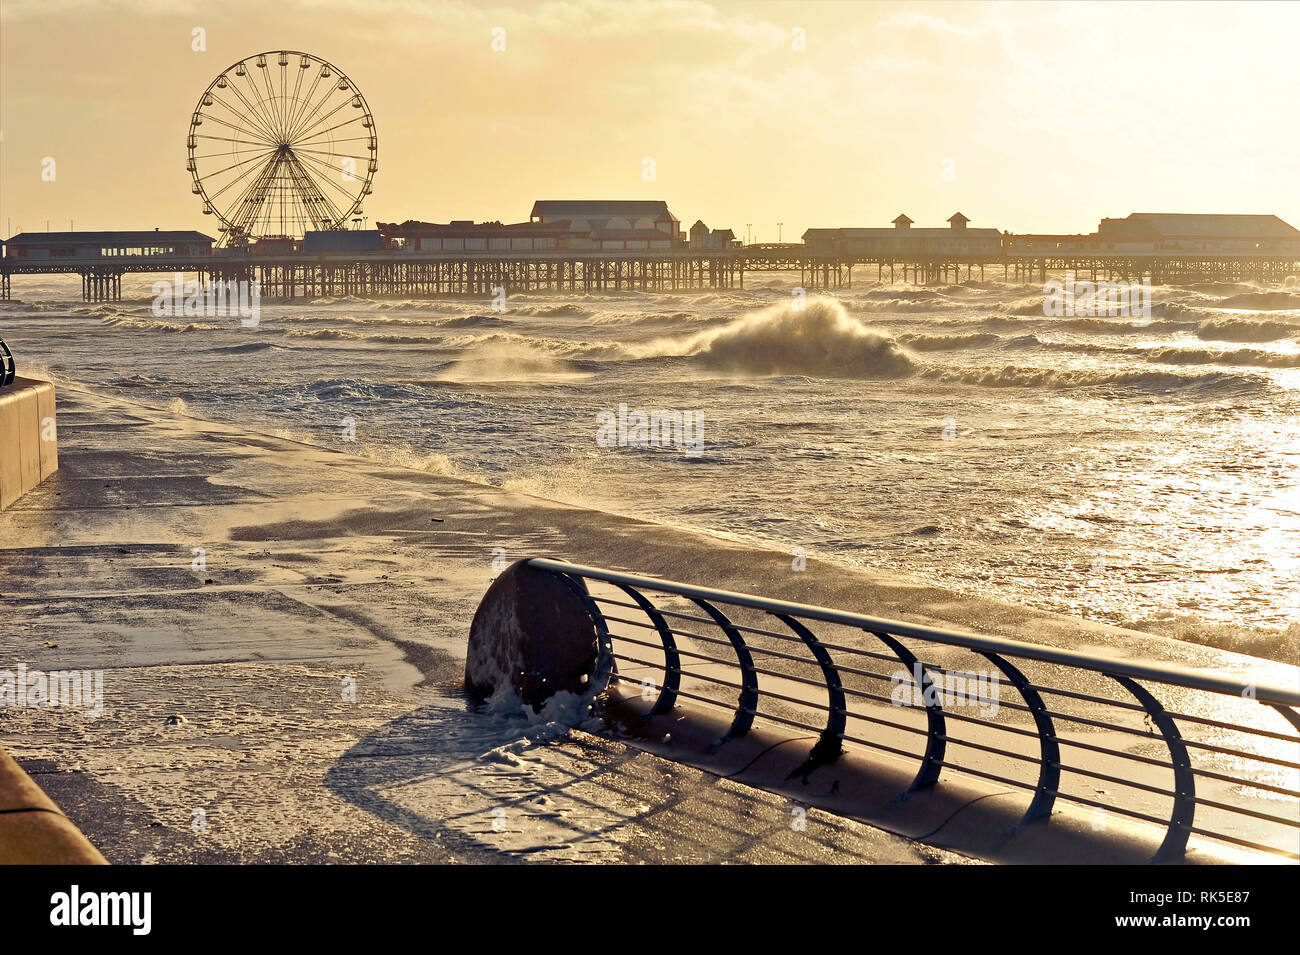 L'état de la mer à Blackpool, Royaume-Uni Banque D'Images